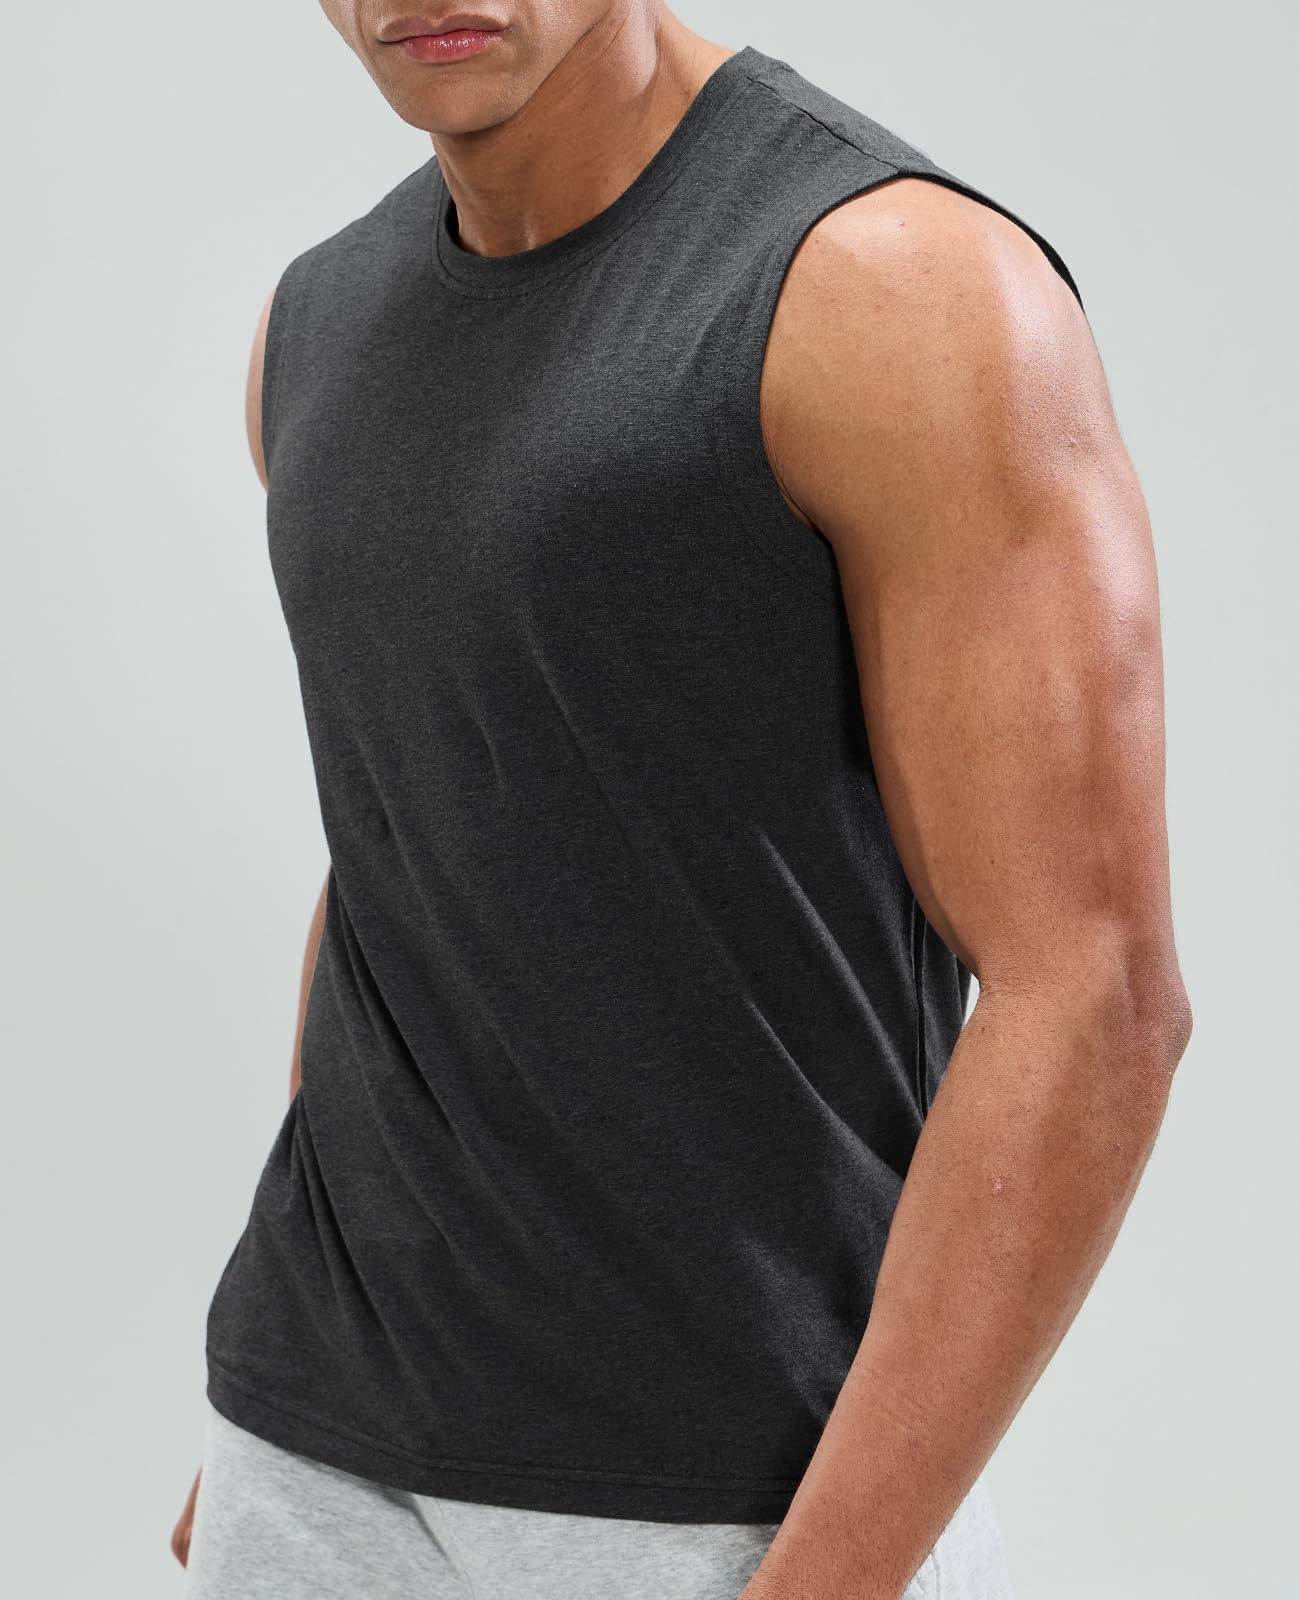 Men's Tank Tops Cotton Sleeveless Muscle Shirts